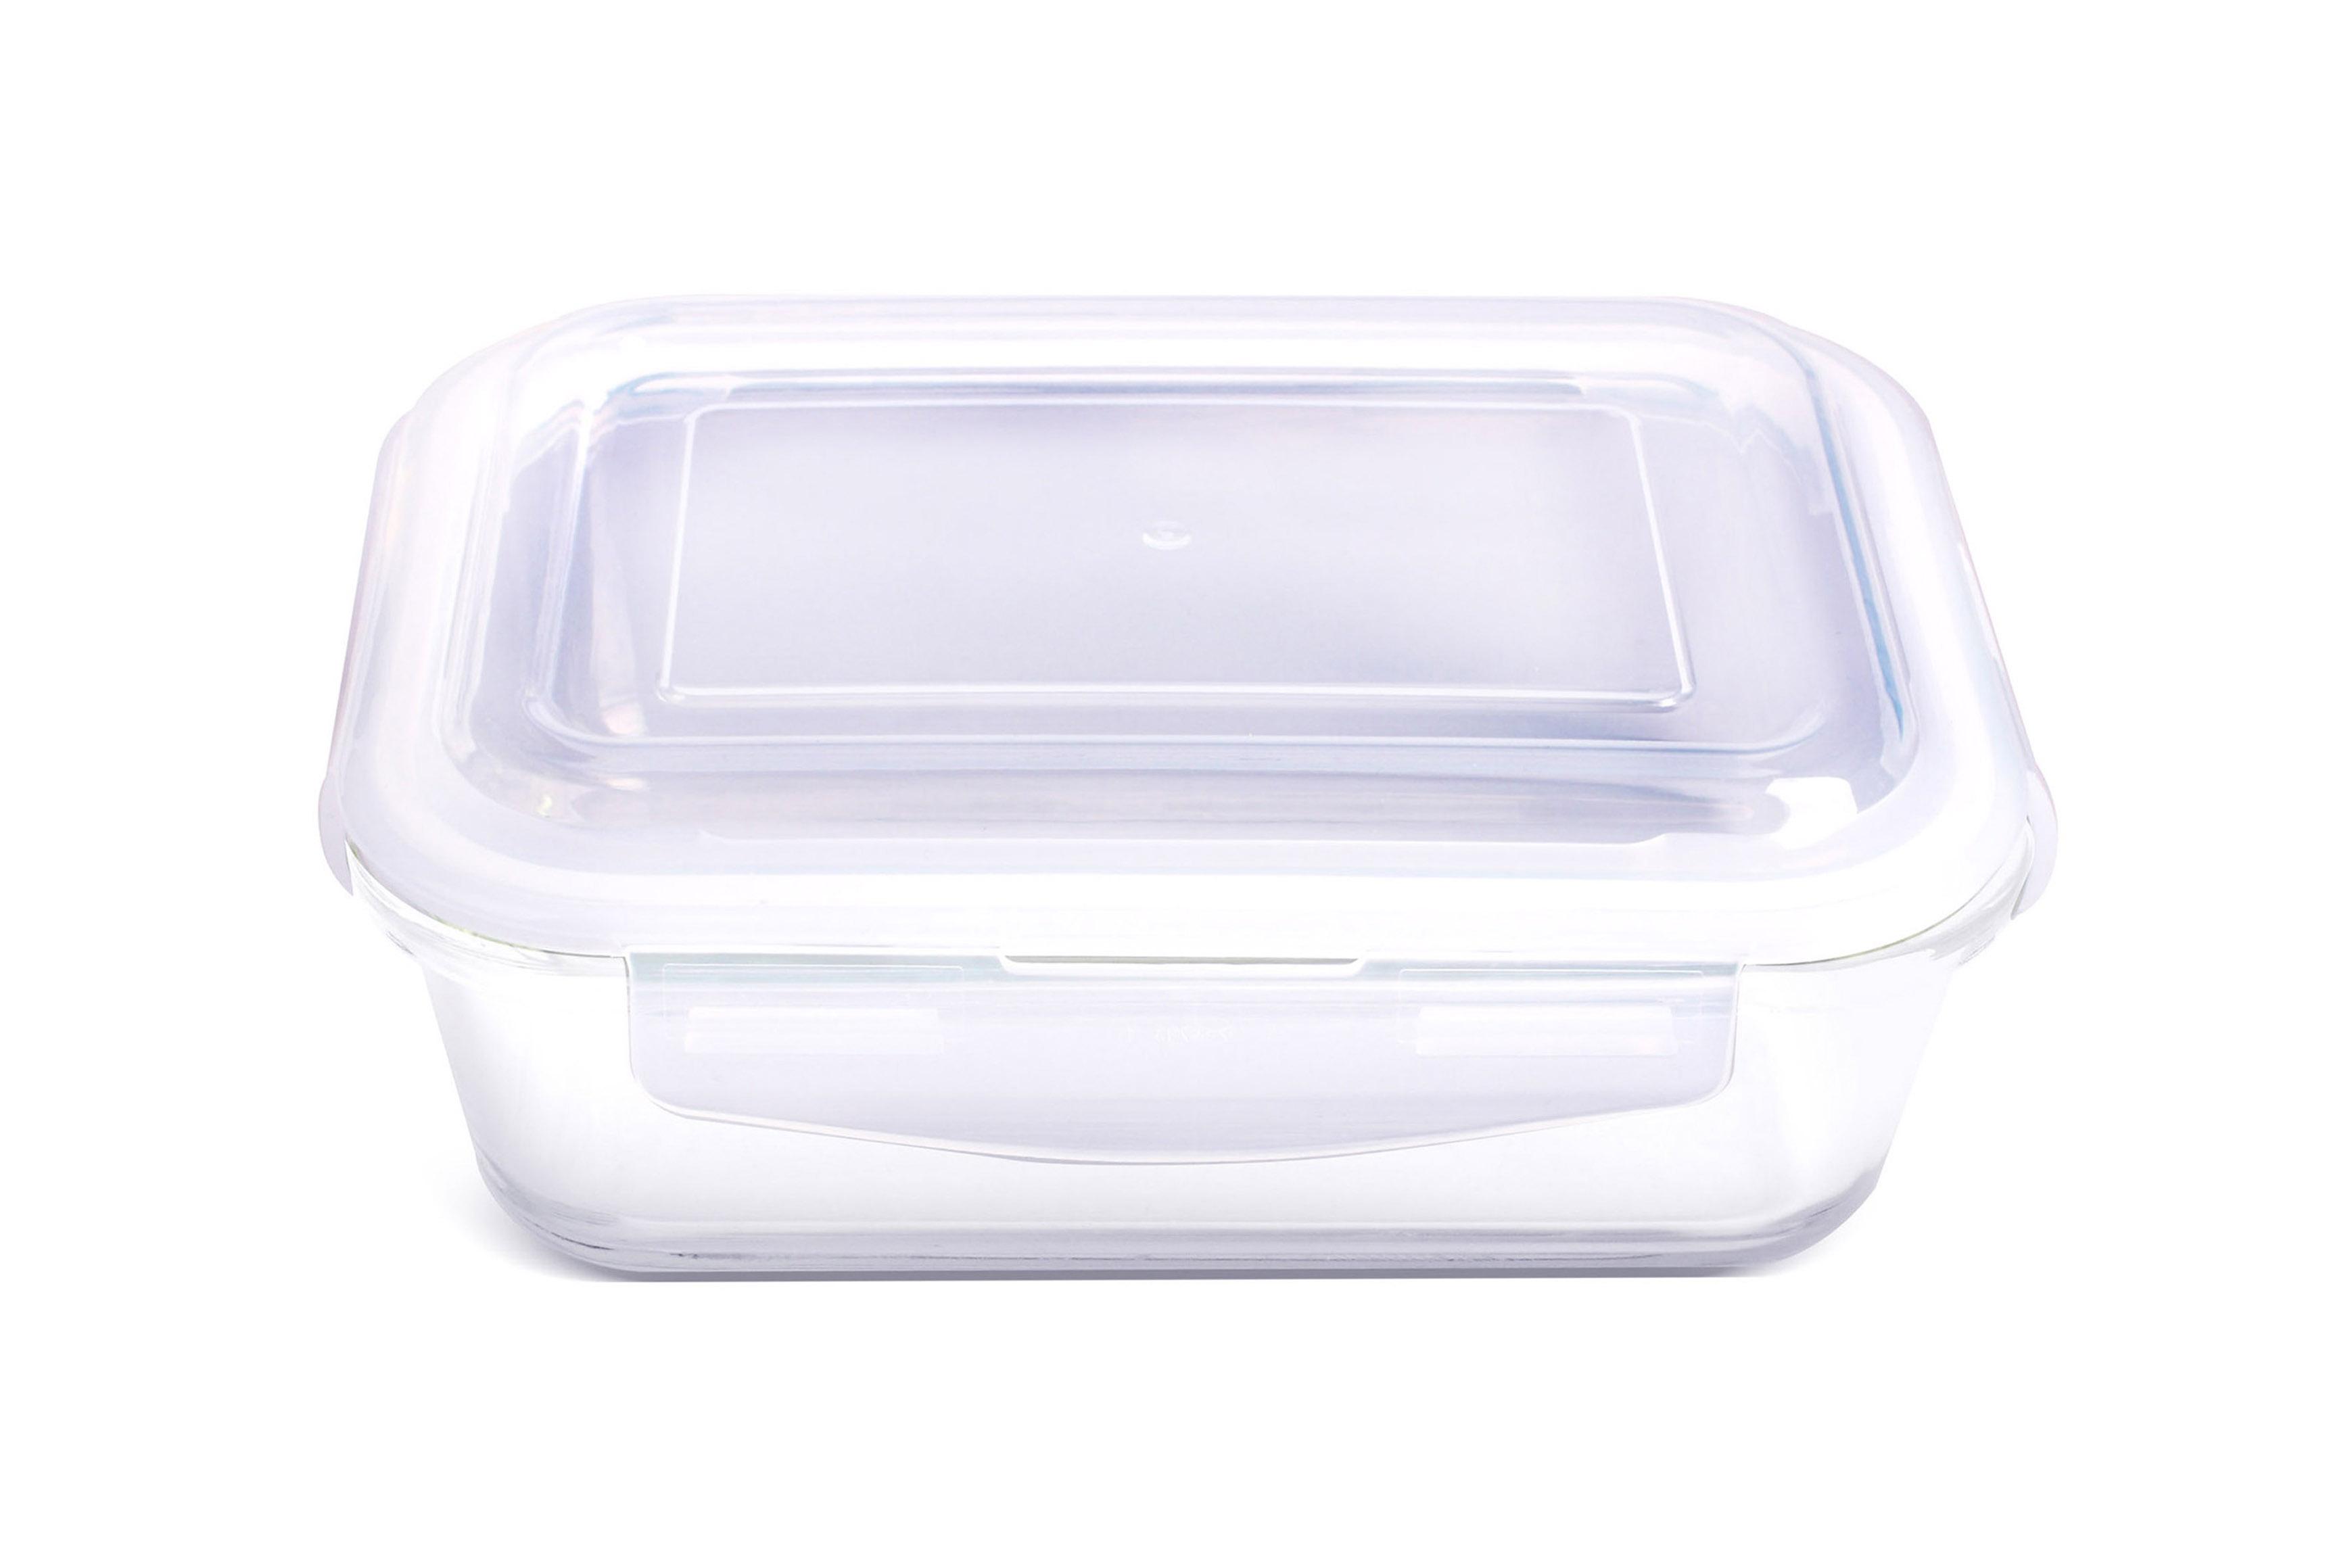 Krabička Na Potraviny Fresh - 2,05l - čiré, plast/sklo (25,8/21,1/9,5cm) - Modern Living